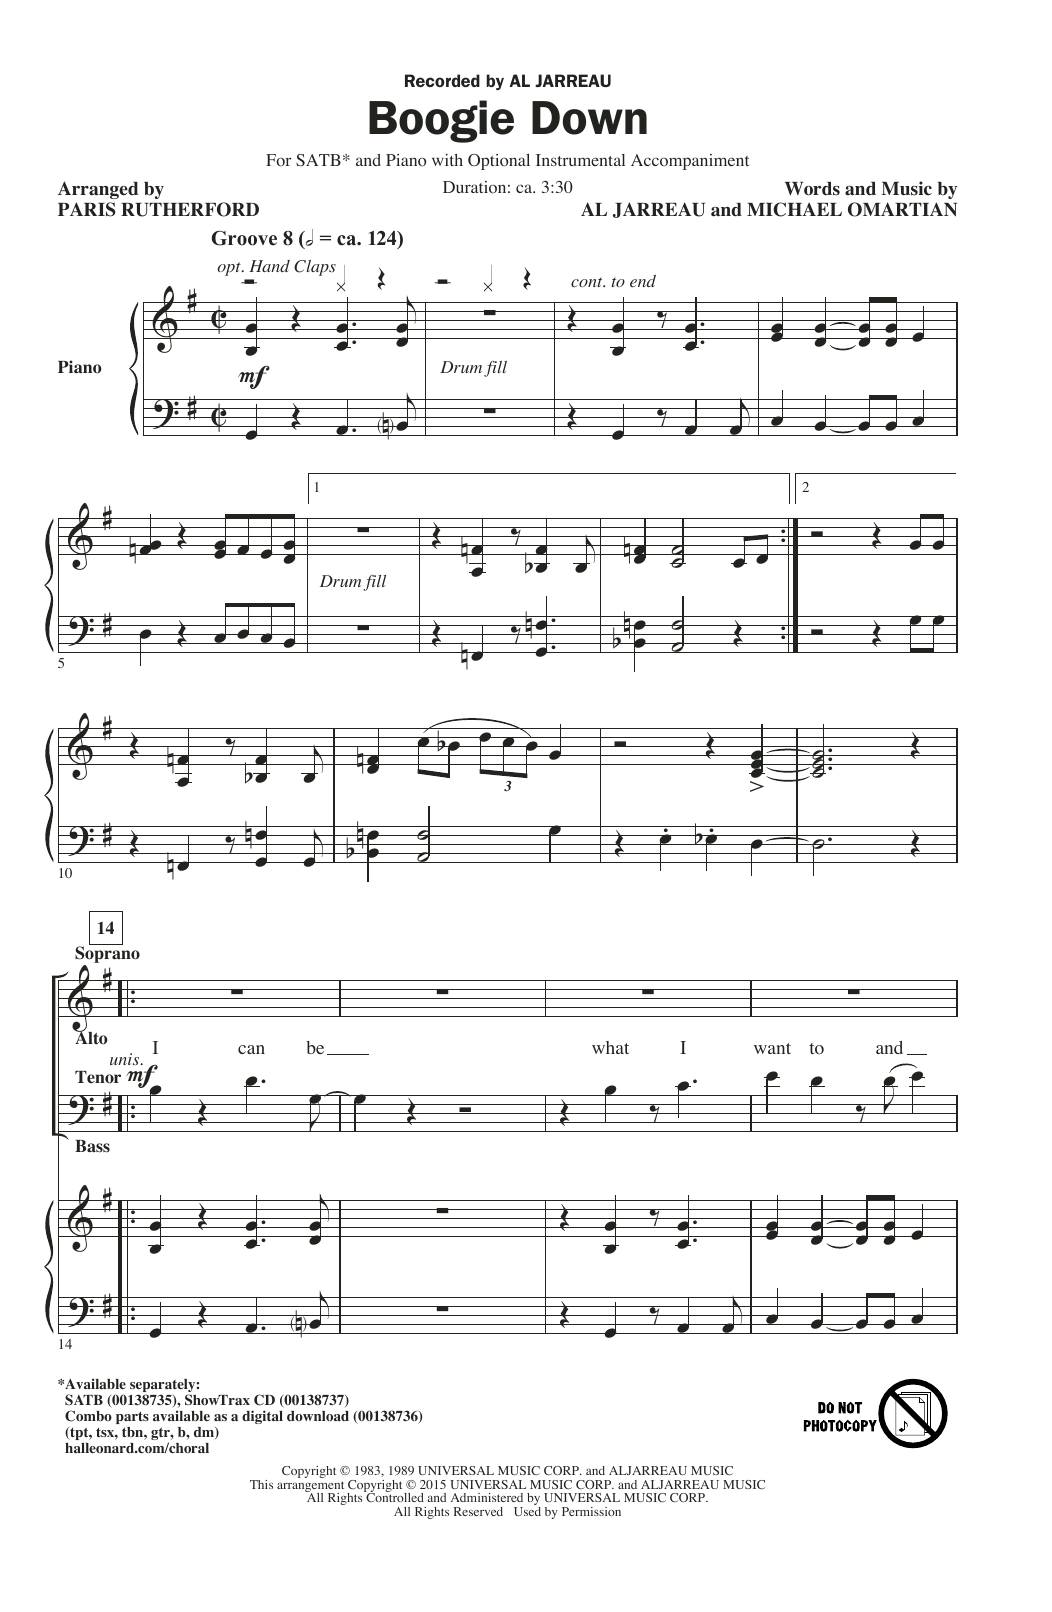 Al Jarreau Boogie Down (arr. Paris Rutherford) Sheet Music Notes & Chords for SATB - Download or Print PDF